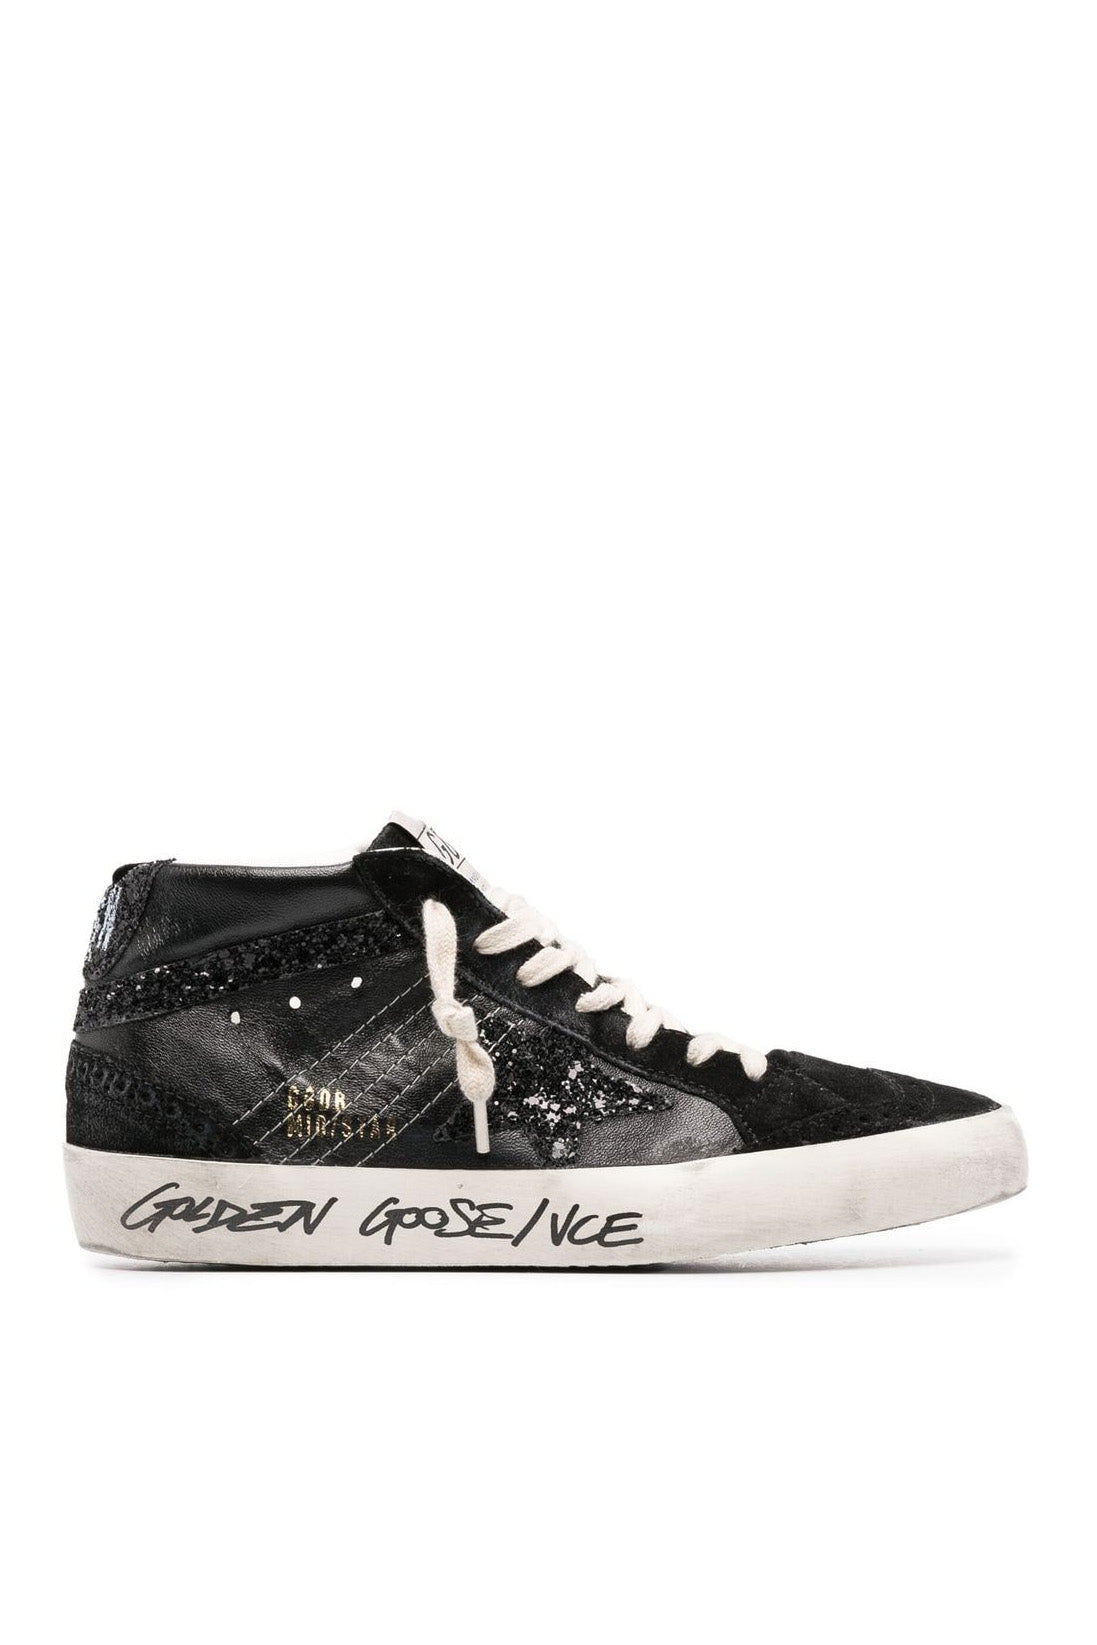 Mid Star Sneakers, black suede & glitter